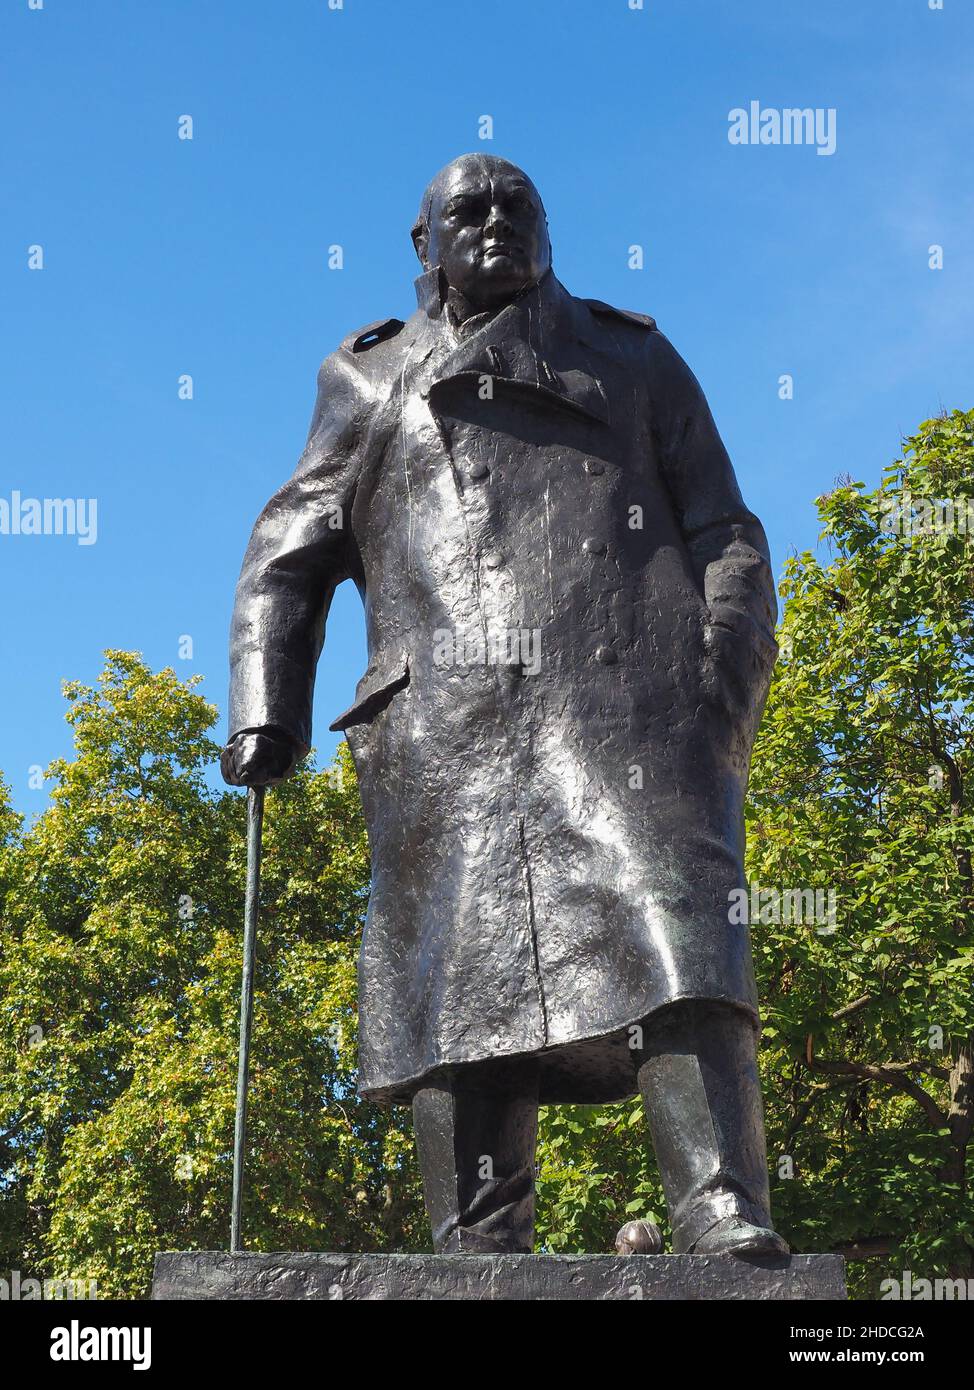 LONDON, UK - CIRCA SEPTEMBER 2019: PM Winston Churchill statue in ...